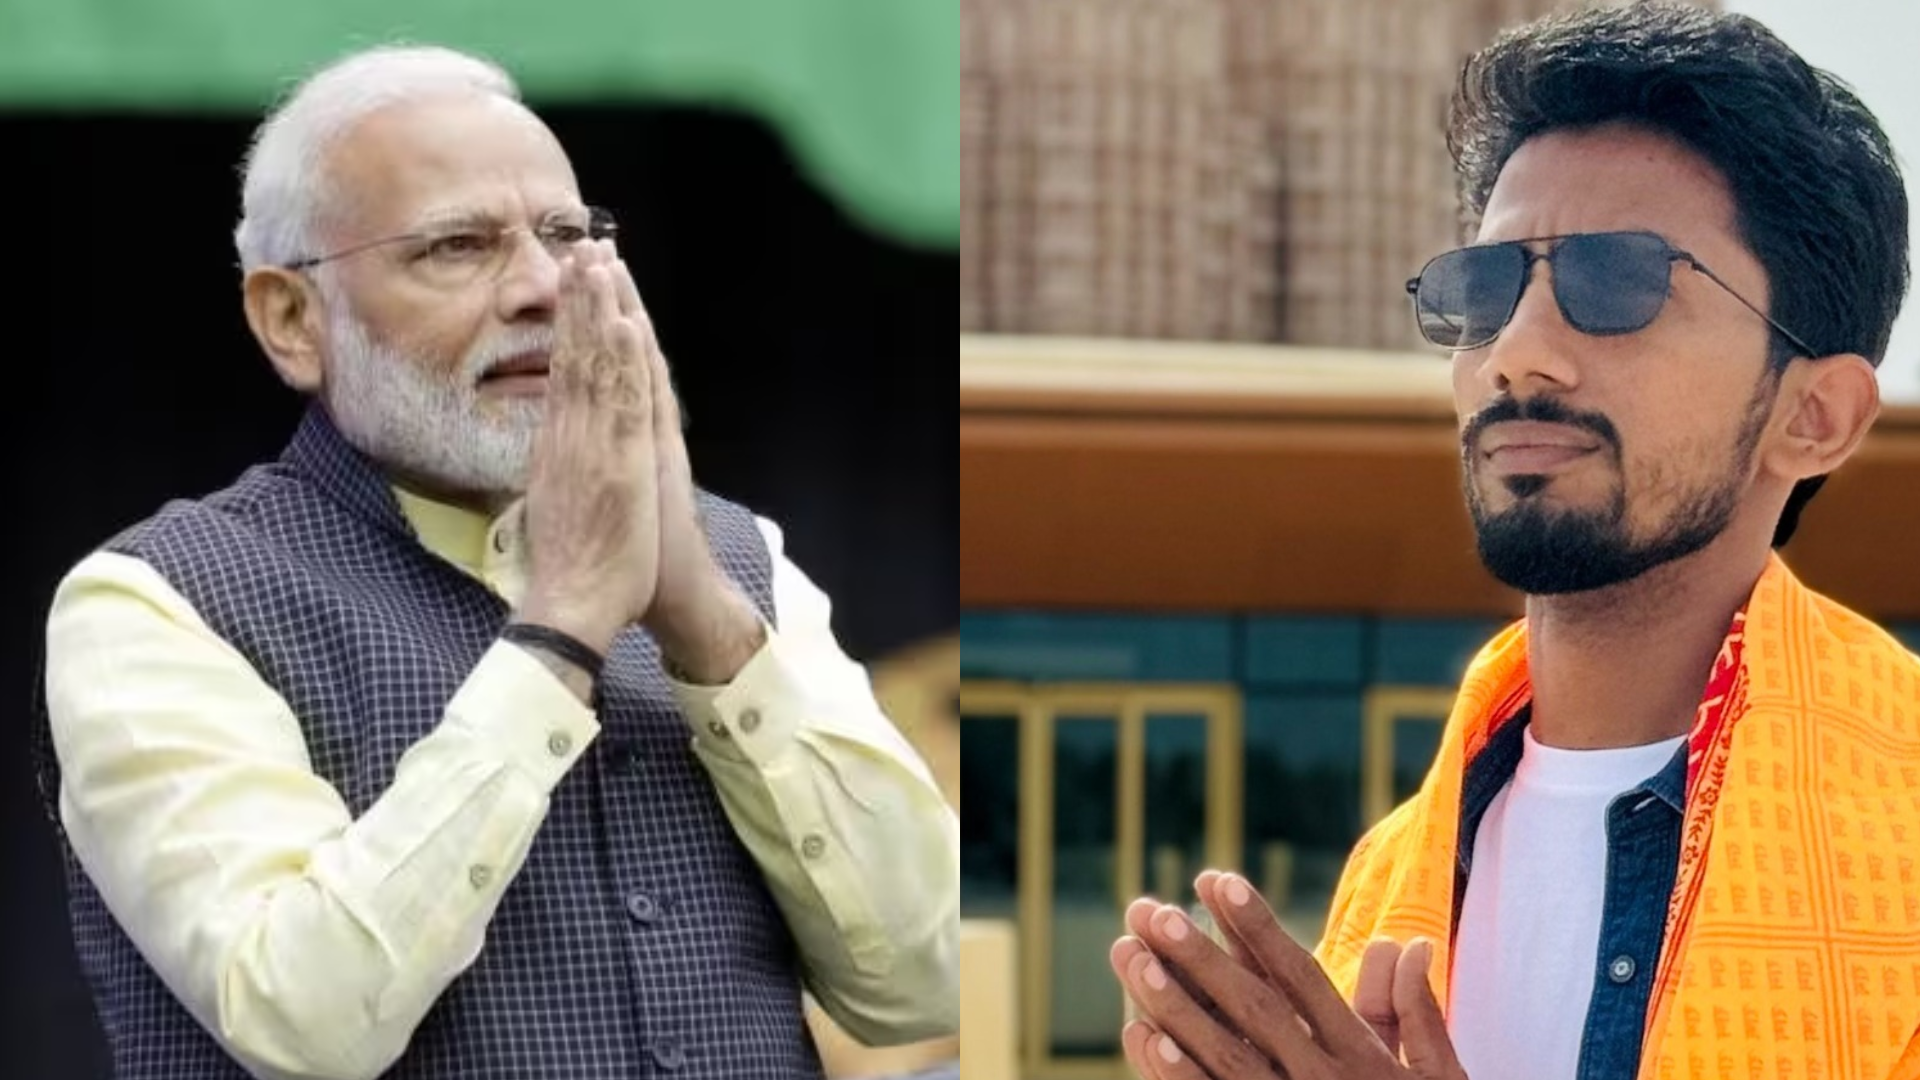 Shyam Rangeela, Comedian, Set To Contest Varanasi Seat Against PM Modi